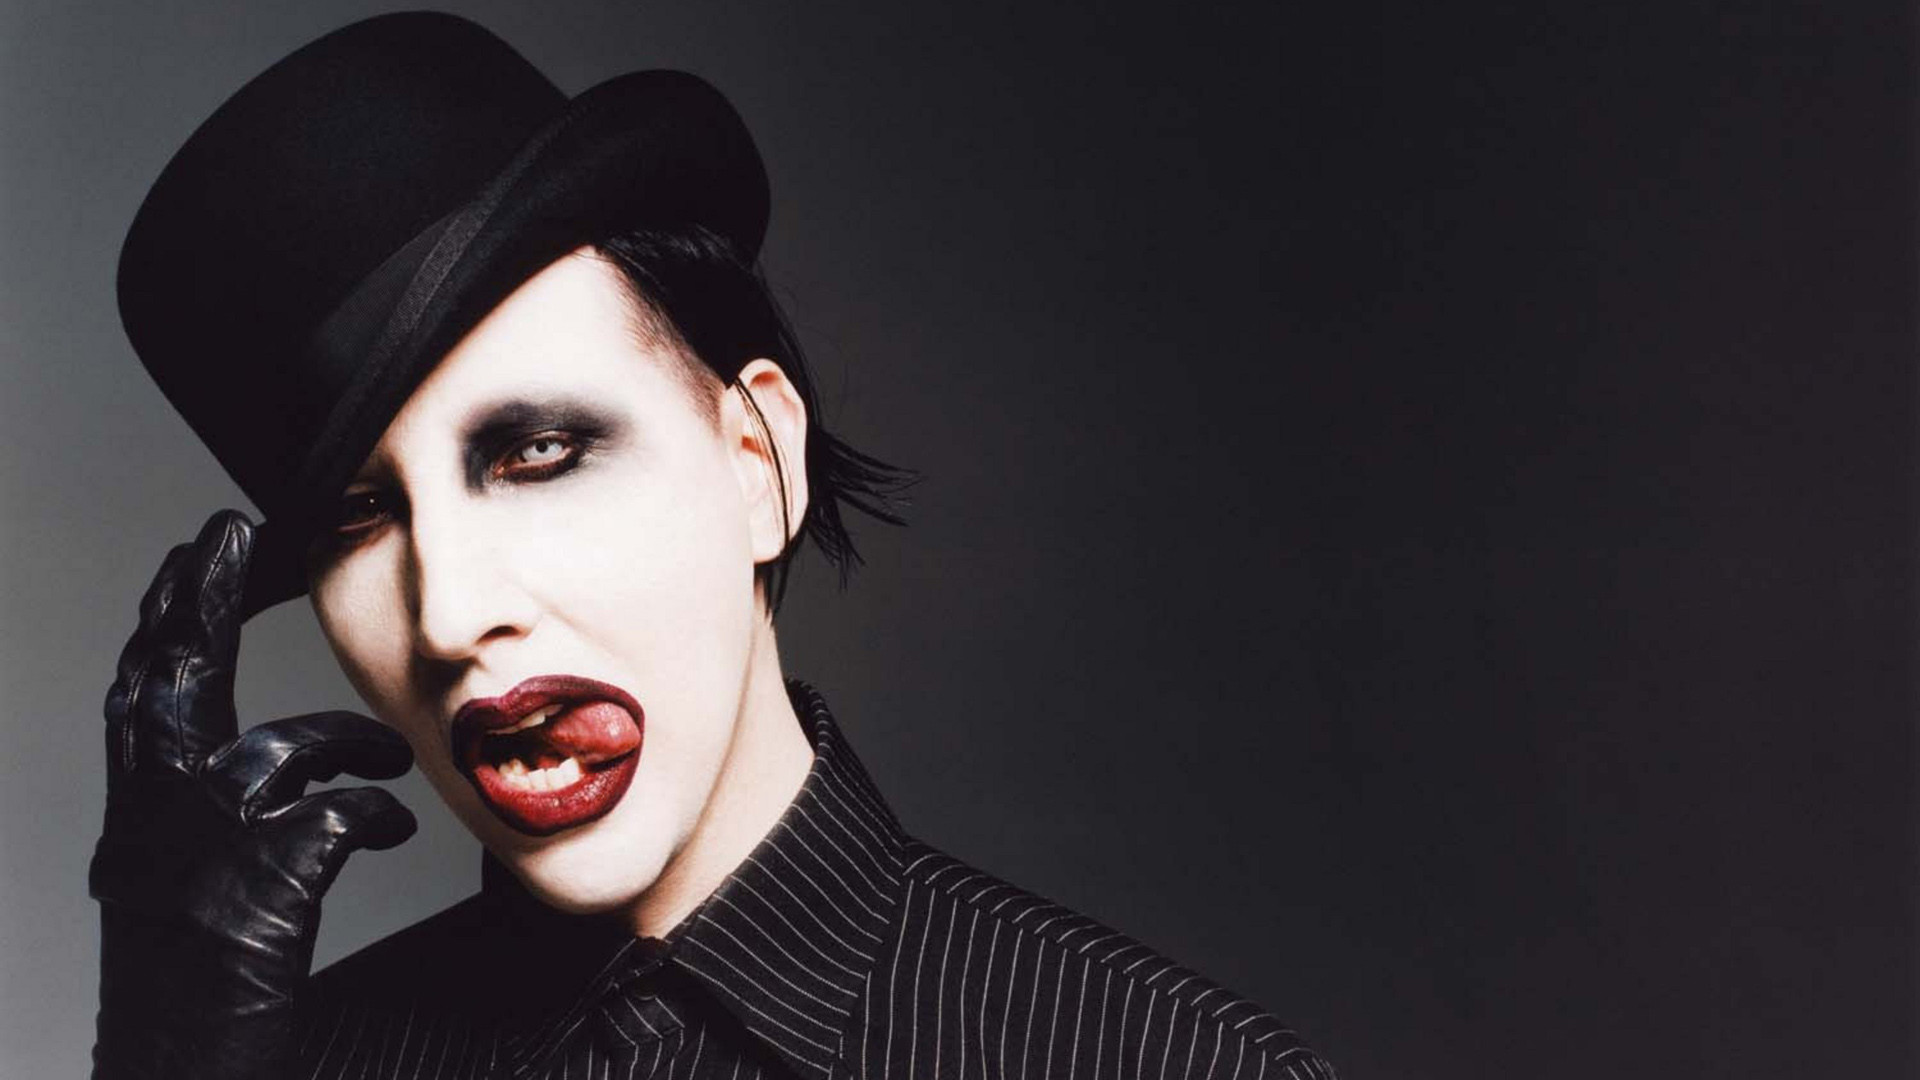 Marilyn Manson Wallpapers – HD Wallpapers 23544 Download Wallpaper Pinterest Marilyn manson and Wallpaper